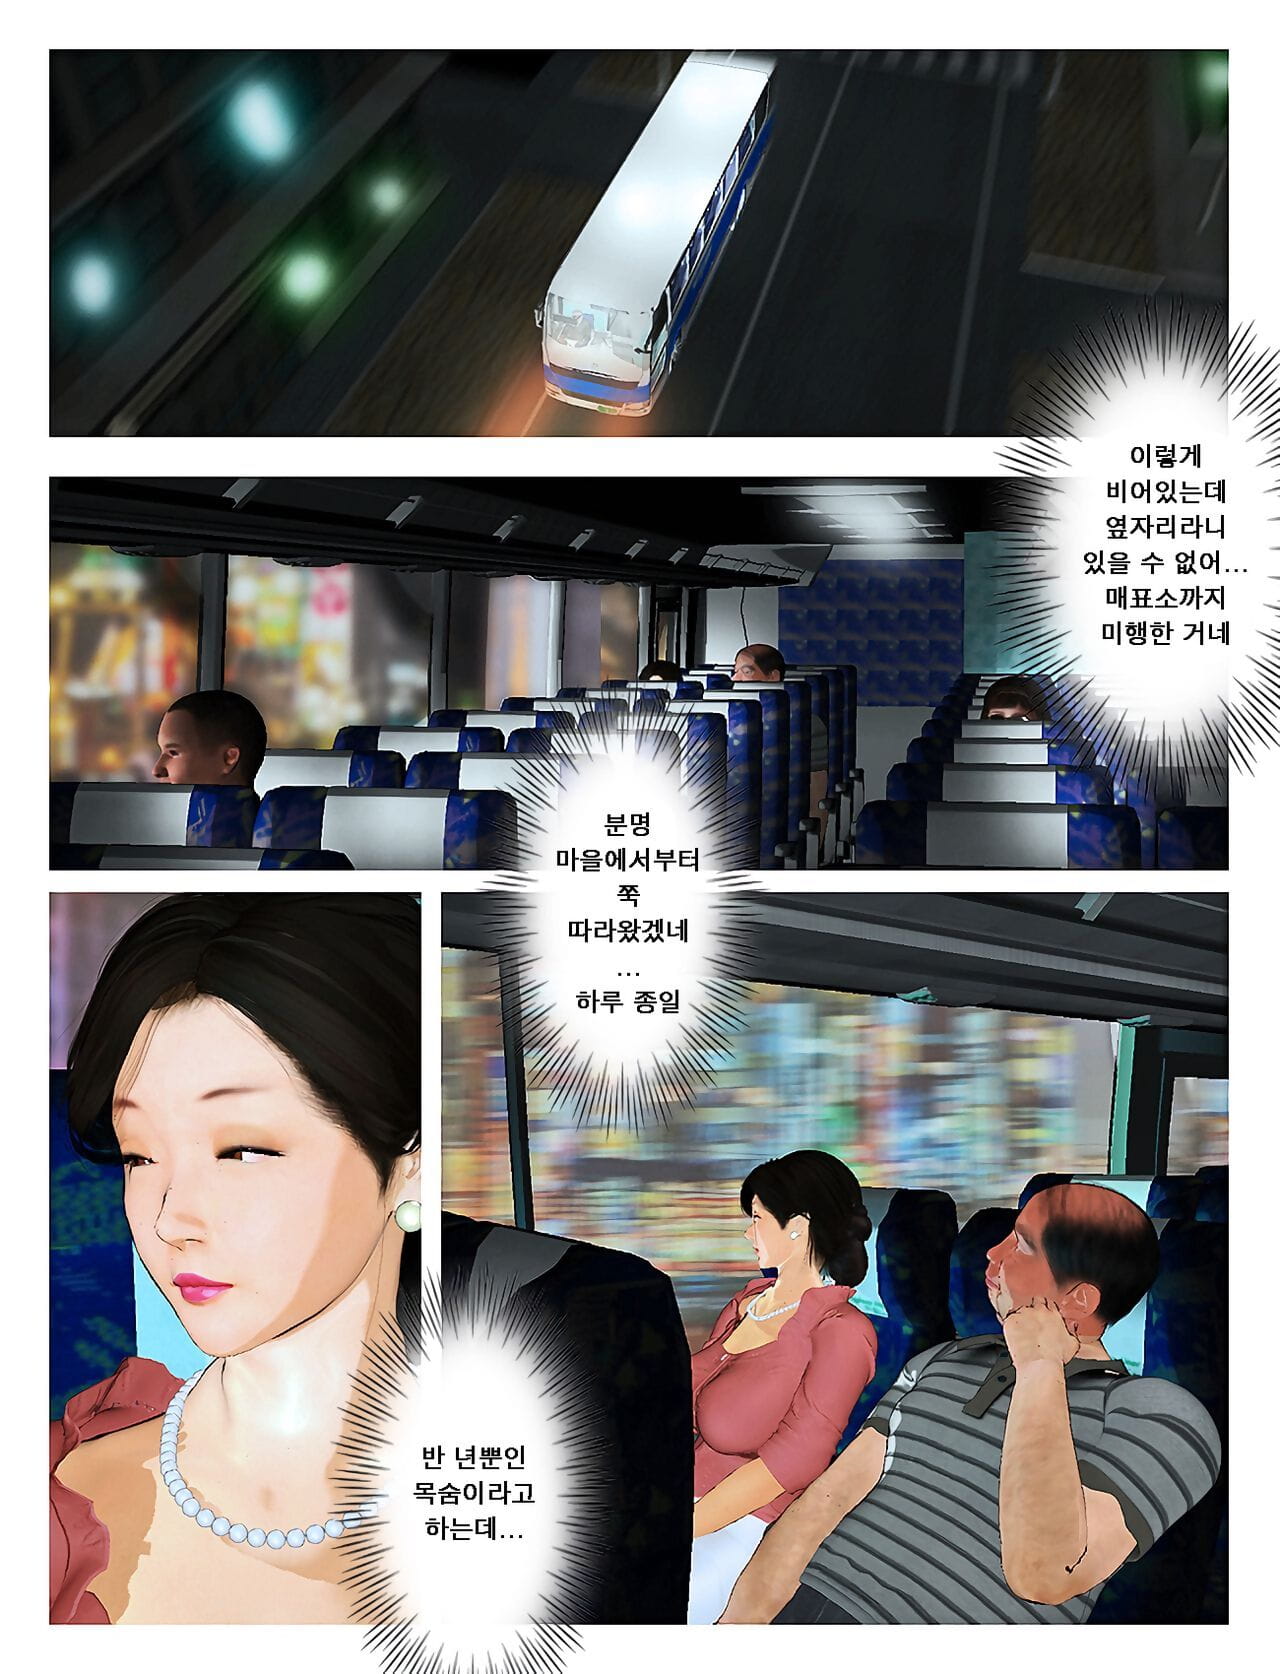 Matar o Rei kyou nenhum misako san 2019:2 오늘의 미사코씨 2019:2 Coreano parte 2 page 1